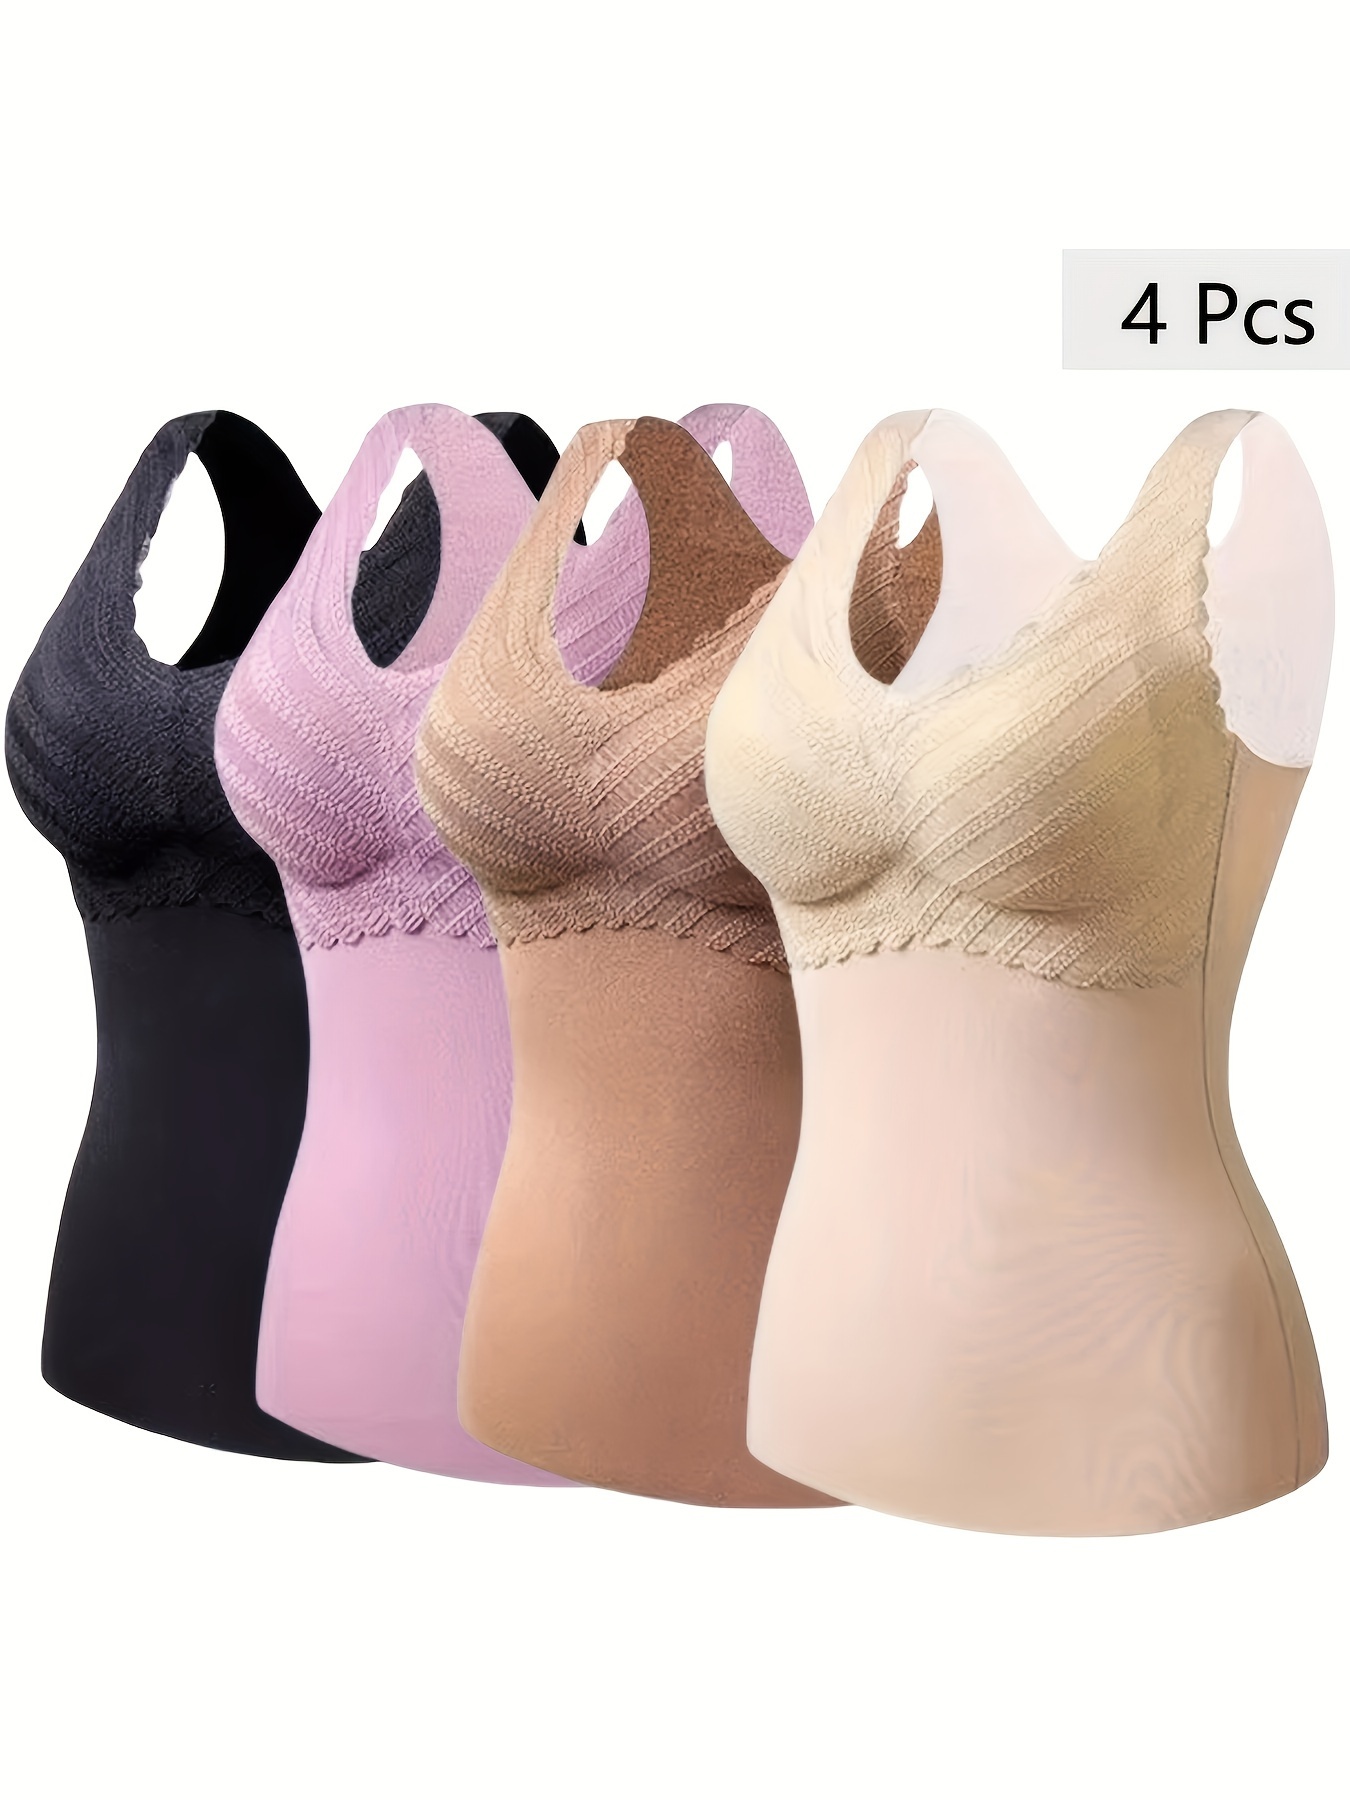 Women's V neck Thermal Comfy Tank Top Underwear Built in Bra